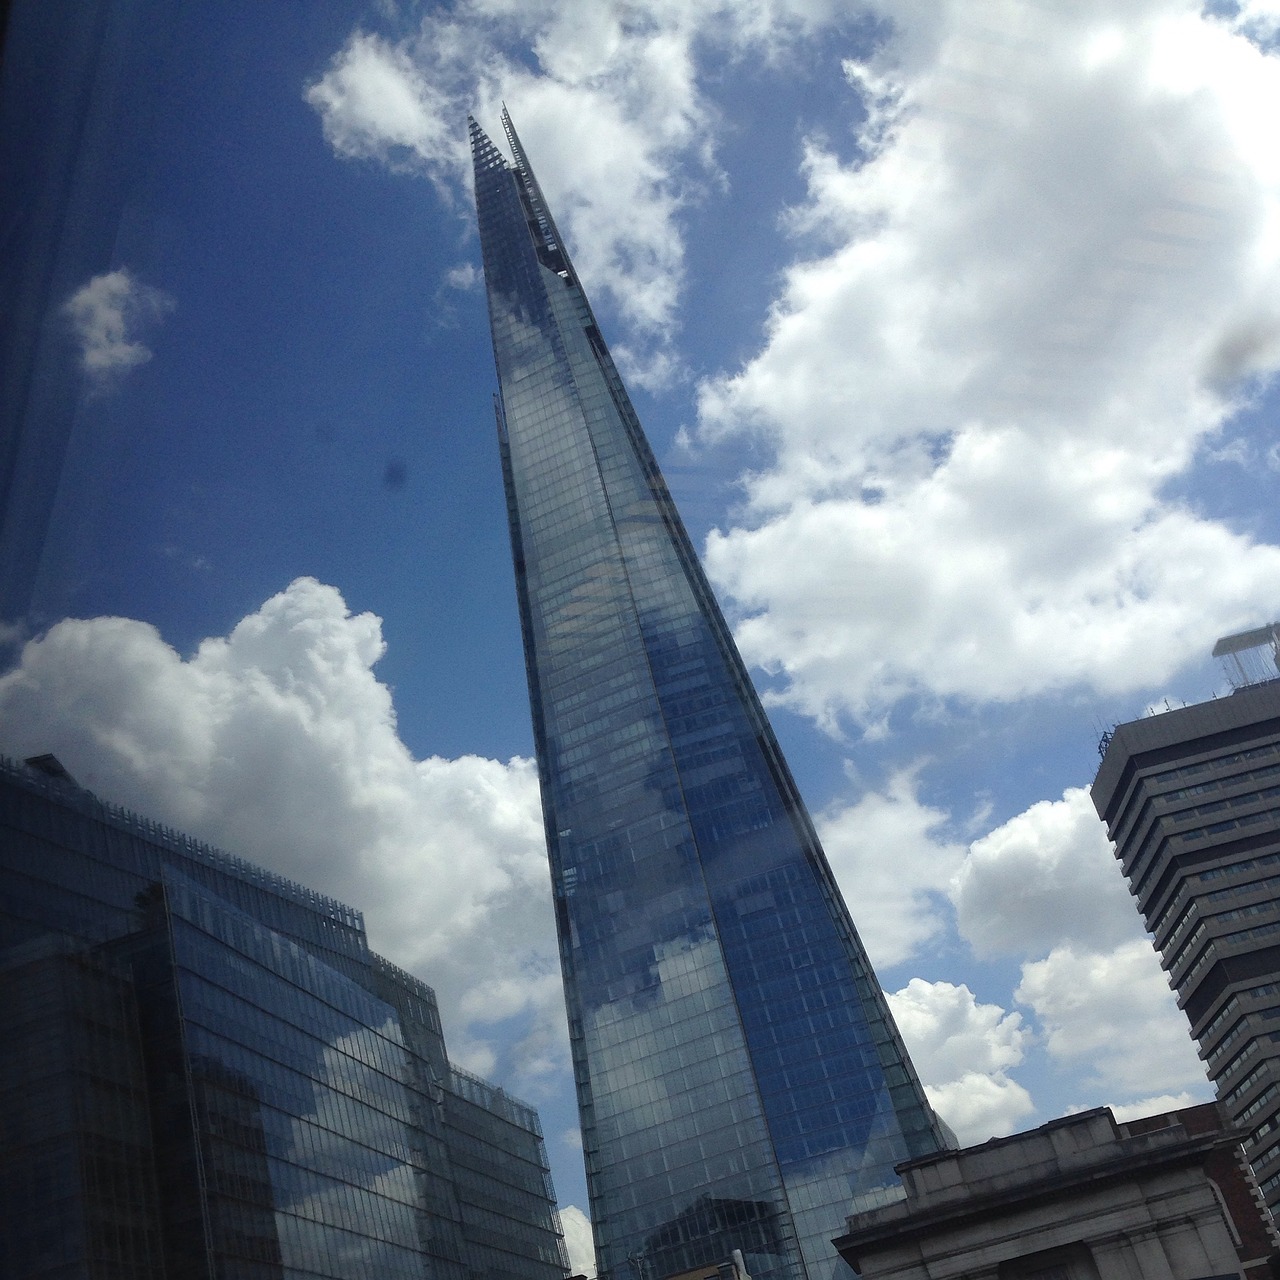 london shard skyscraper free photo